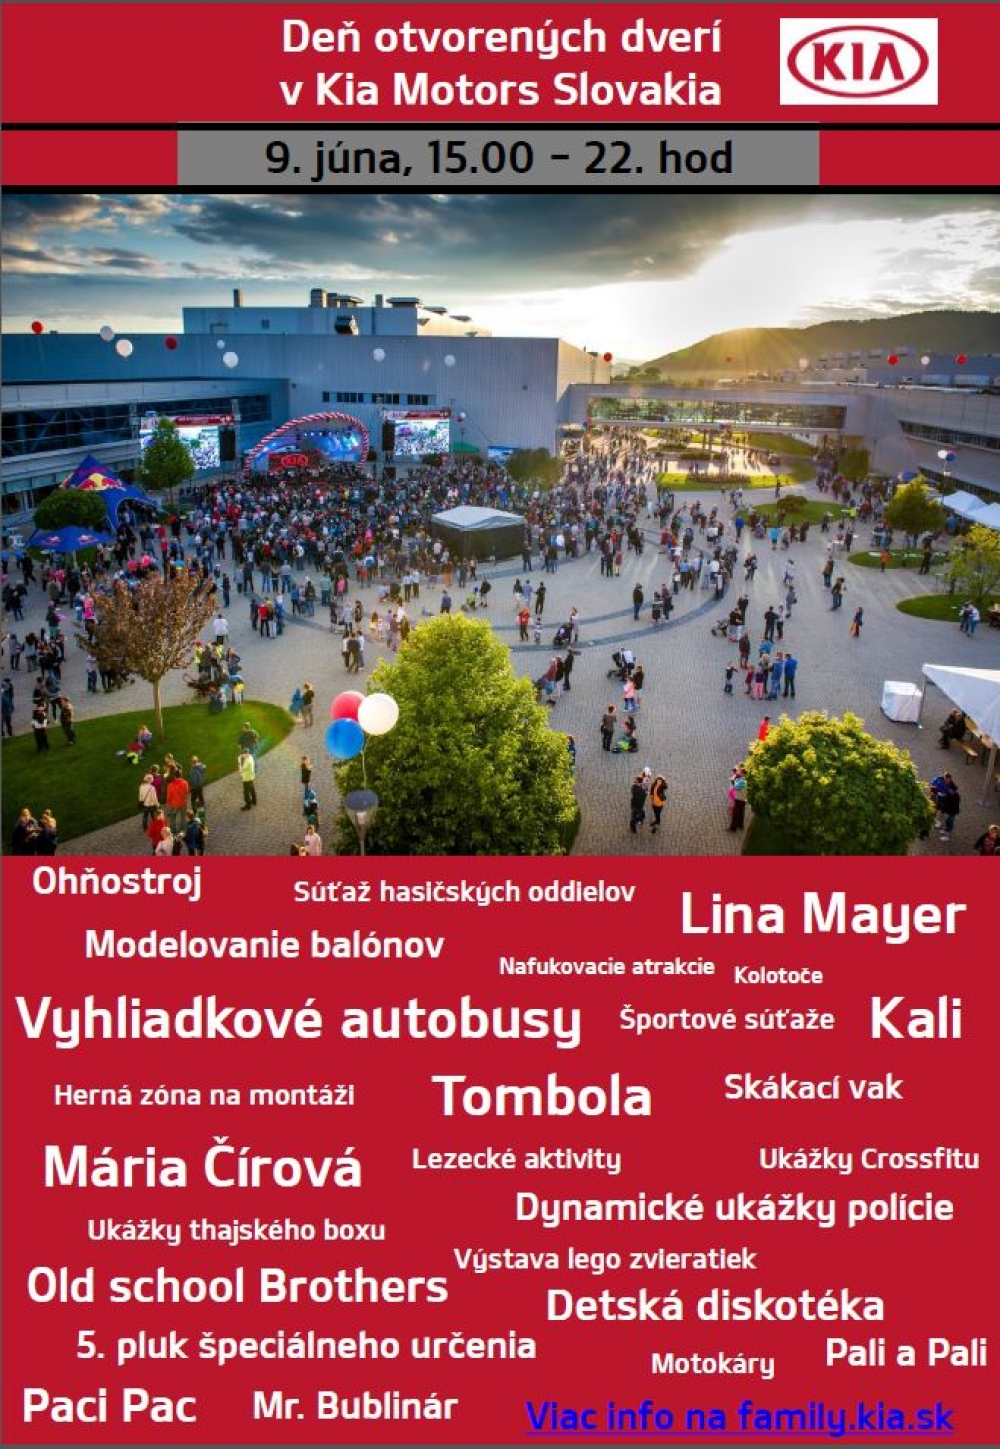 De otvorench dver v Kia Motors Slovakia 2018 ilna